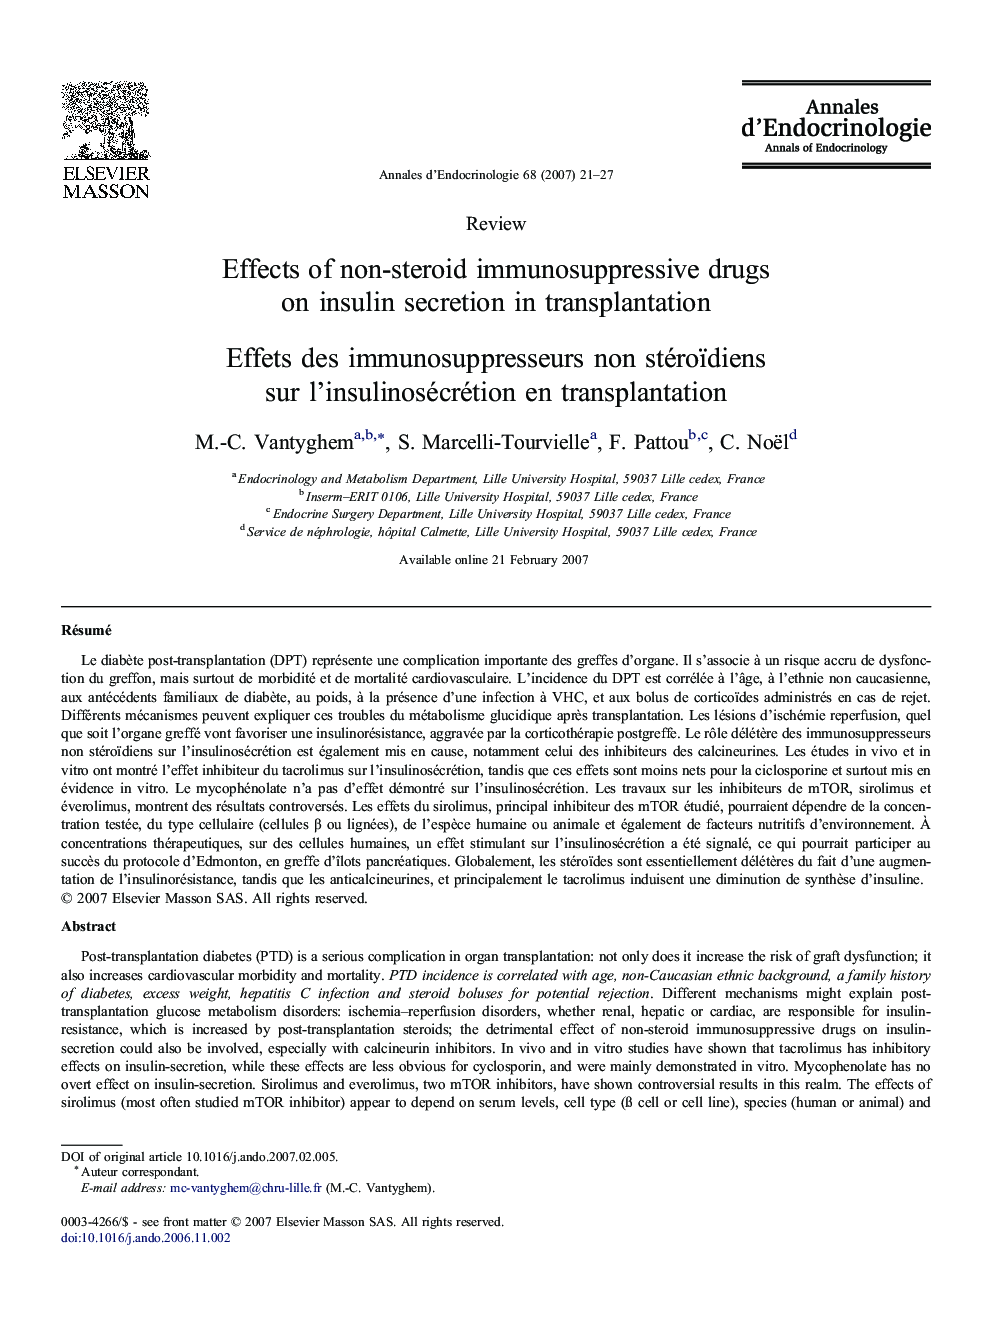 Effects of non-steroid immunosuppressive drugs on insulin secretion in transplantation